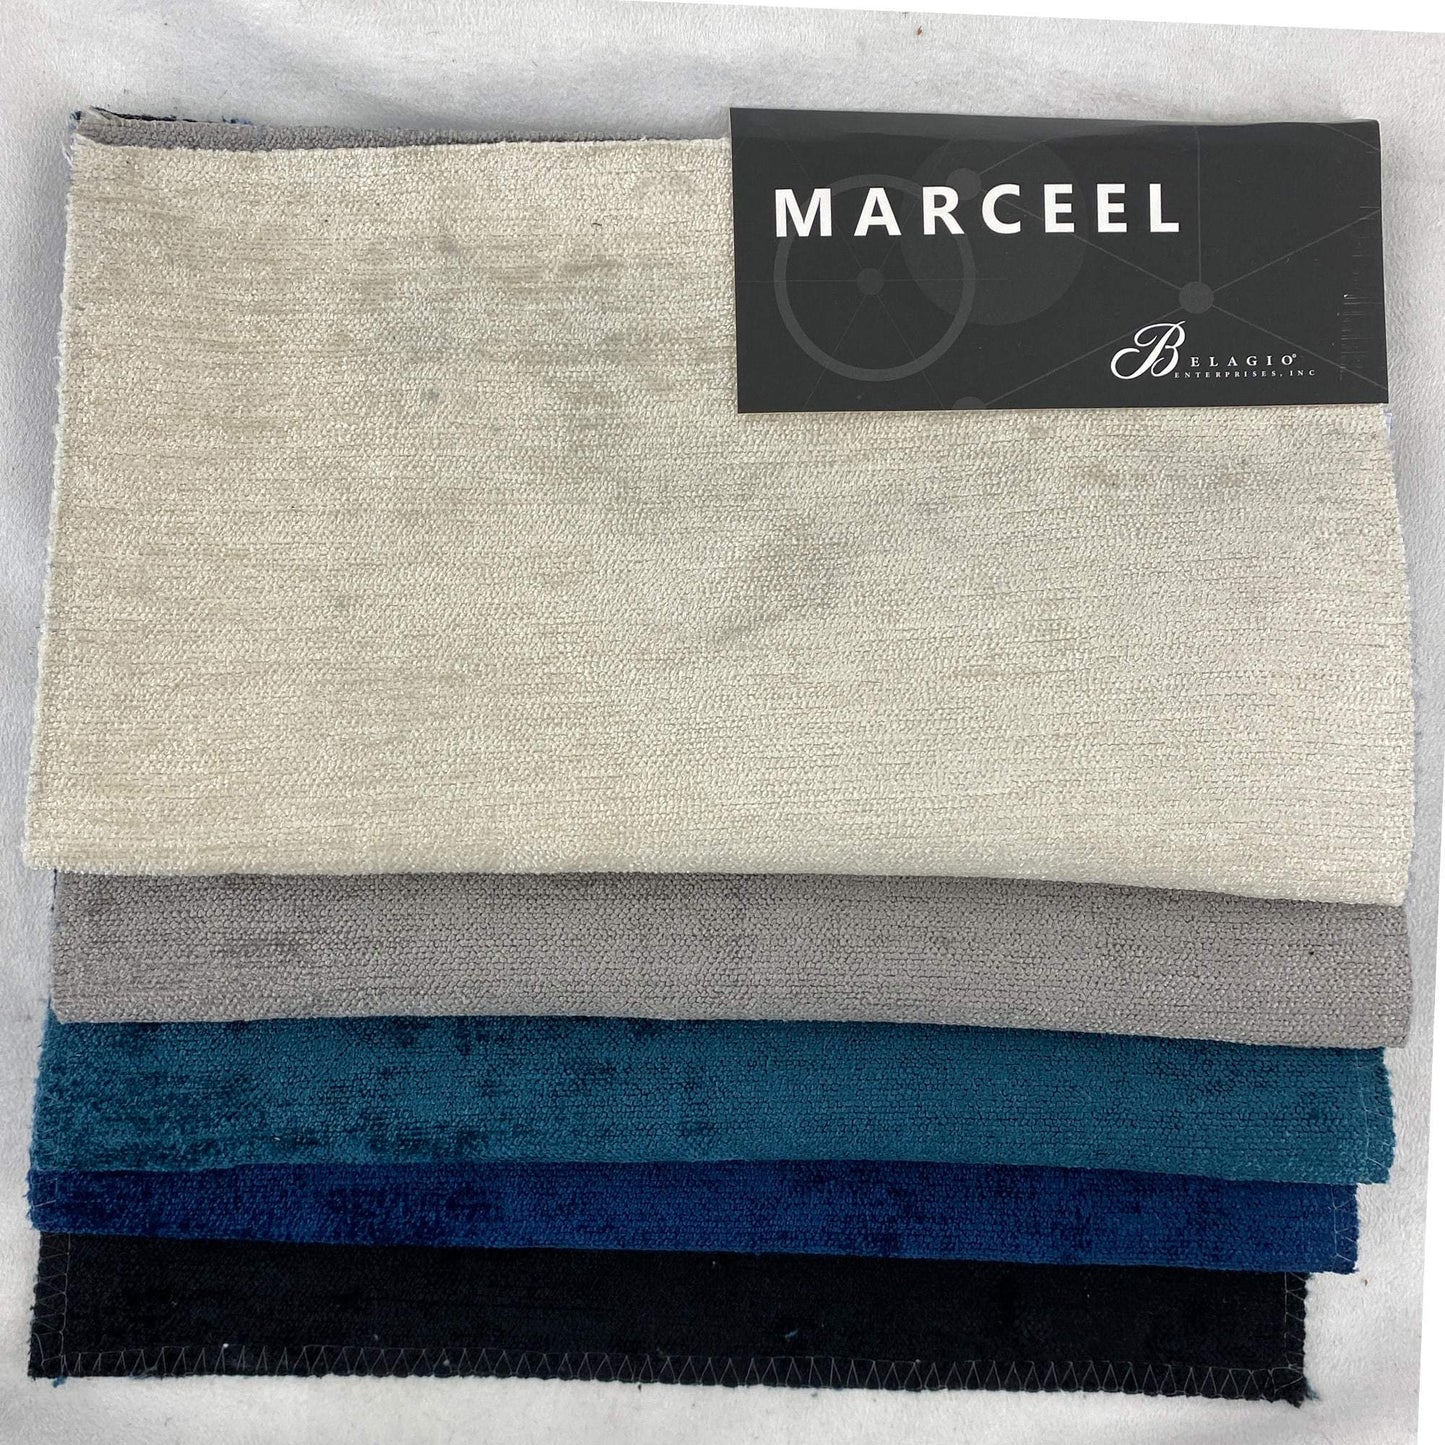 "Marceel" Fabric (Dove Color)